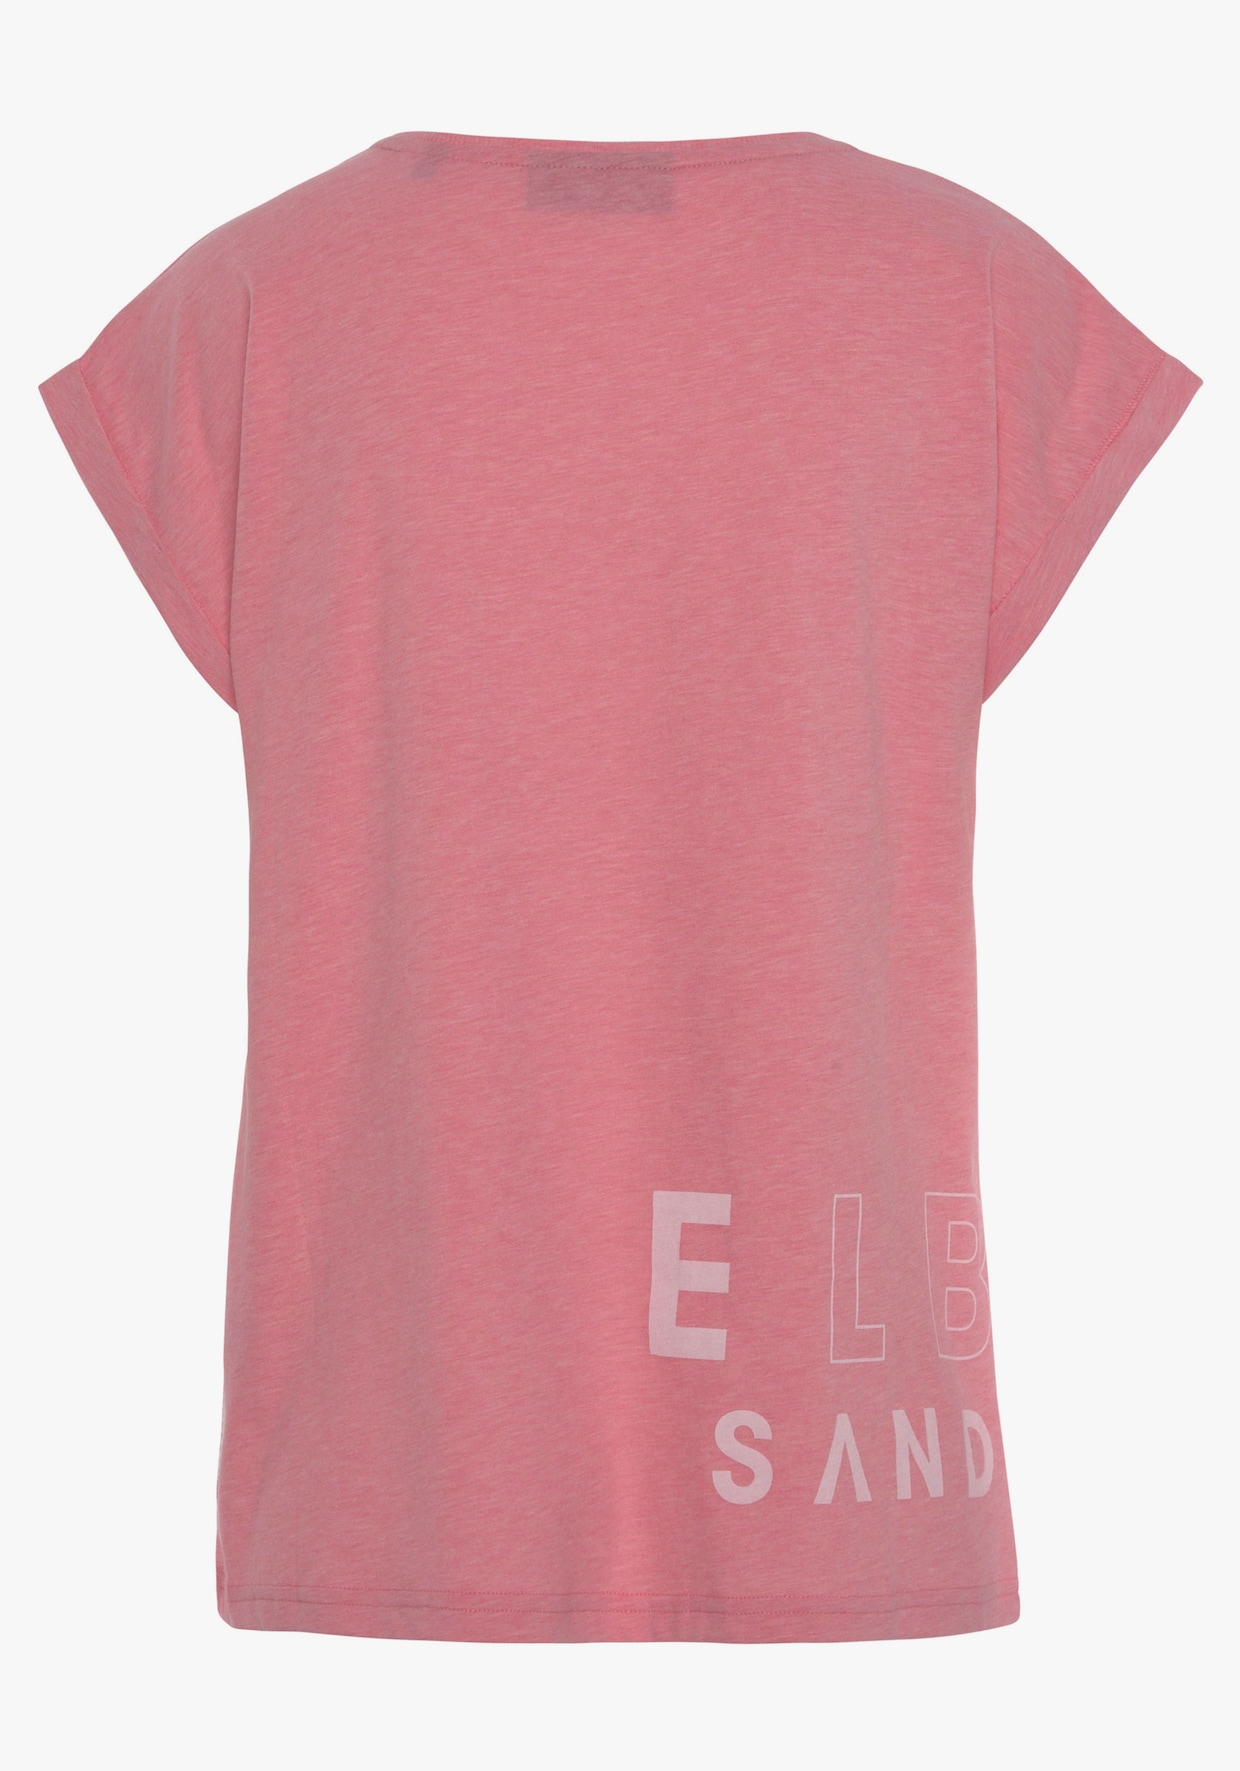 Elbsand T-shirt - fuchsia